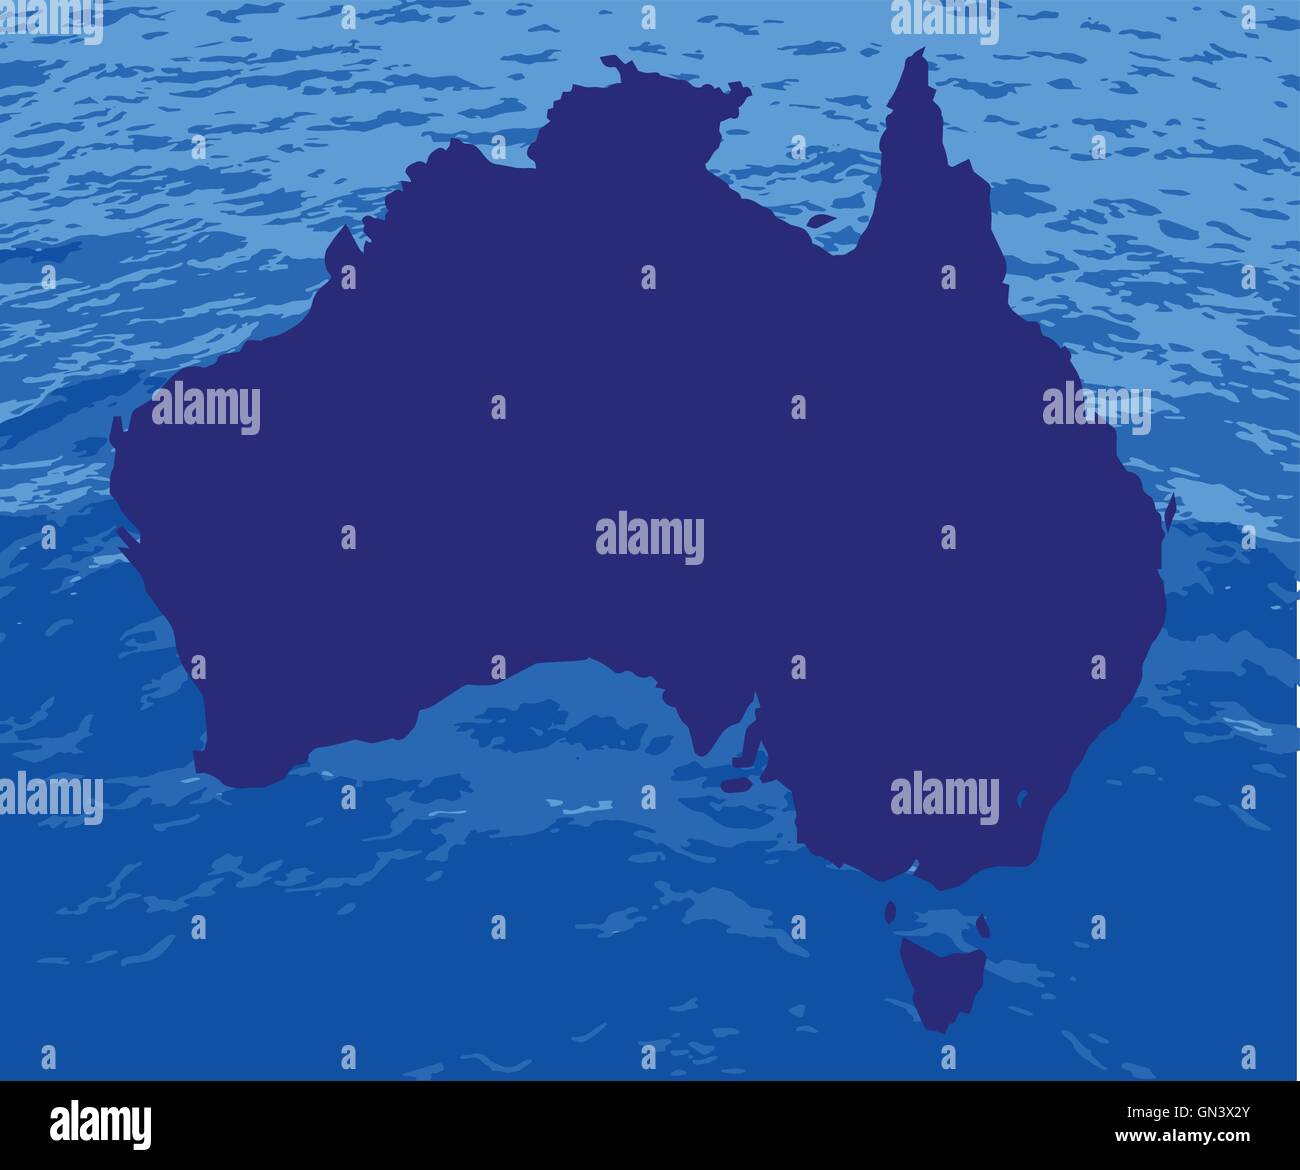 Australische Silhouette Ozean Karte Stock Vektor